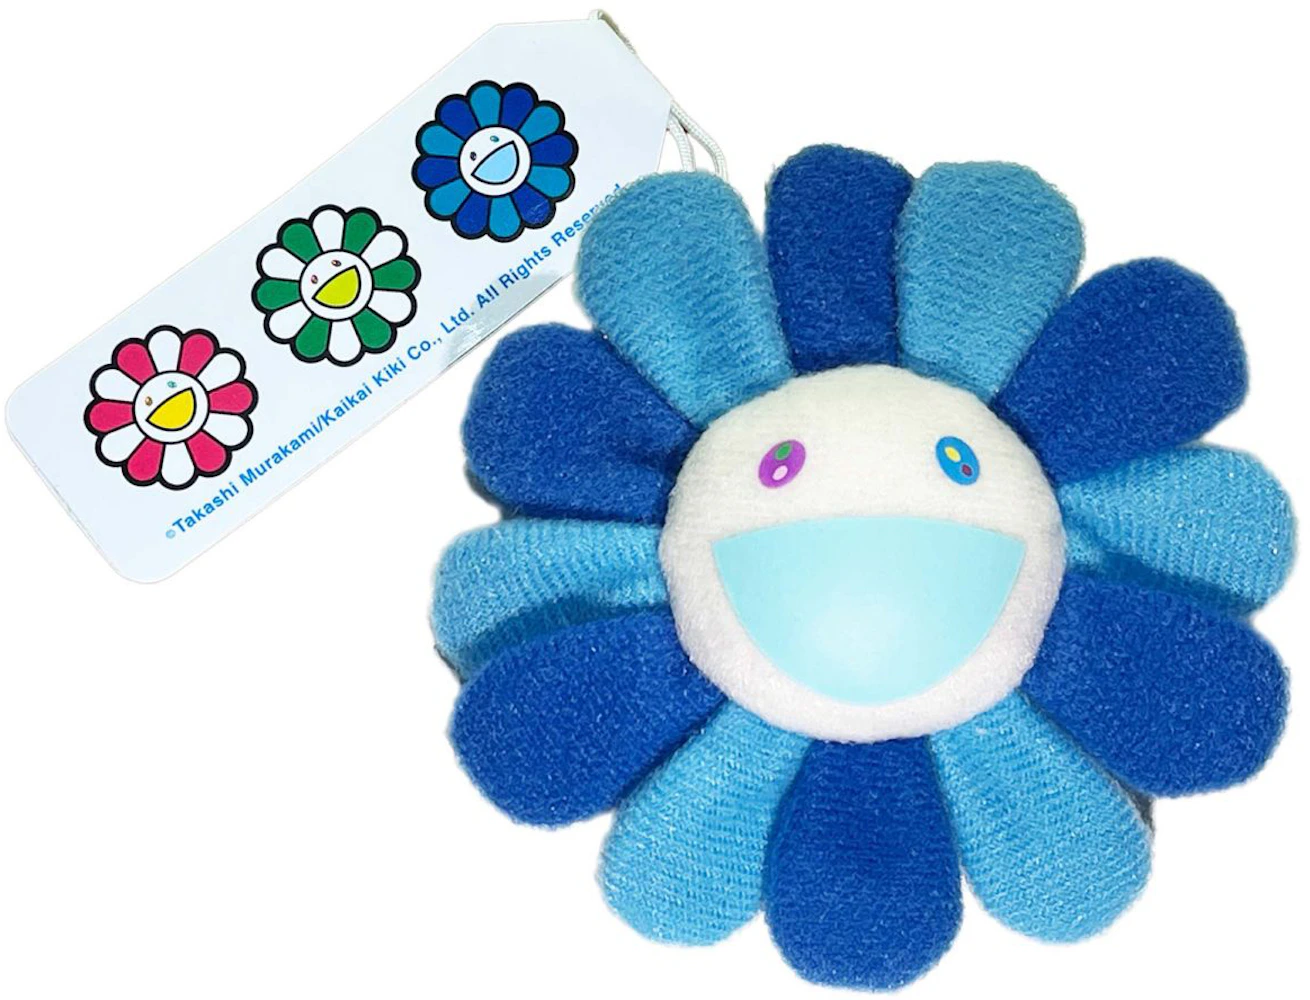 Little Luxuries Designs Takashi Murakami Style Flower Keychain/Bag Charm